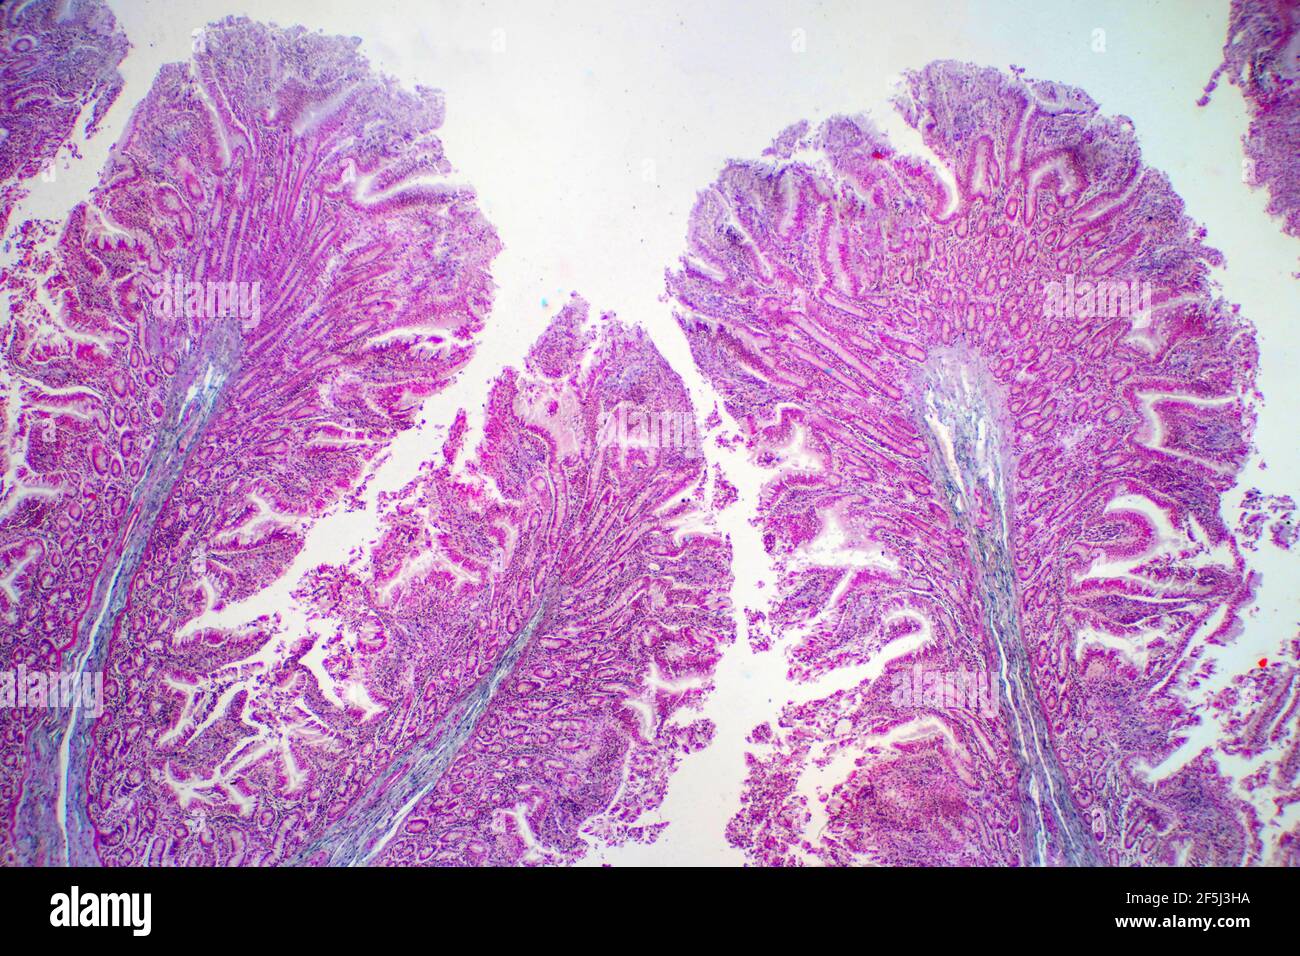 Human large intestine tissue, light micrograph Stock Photo